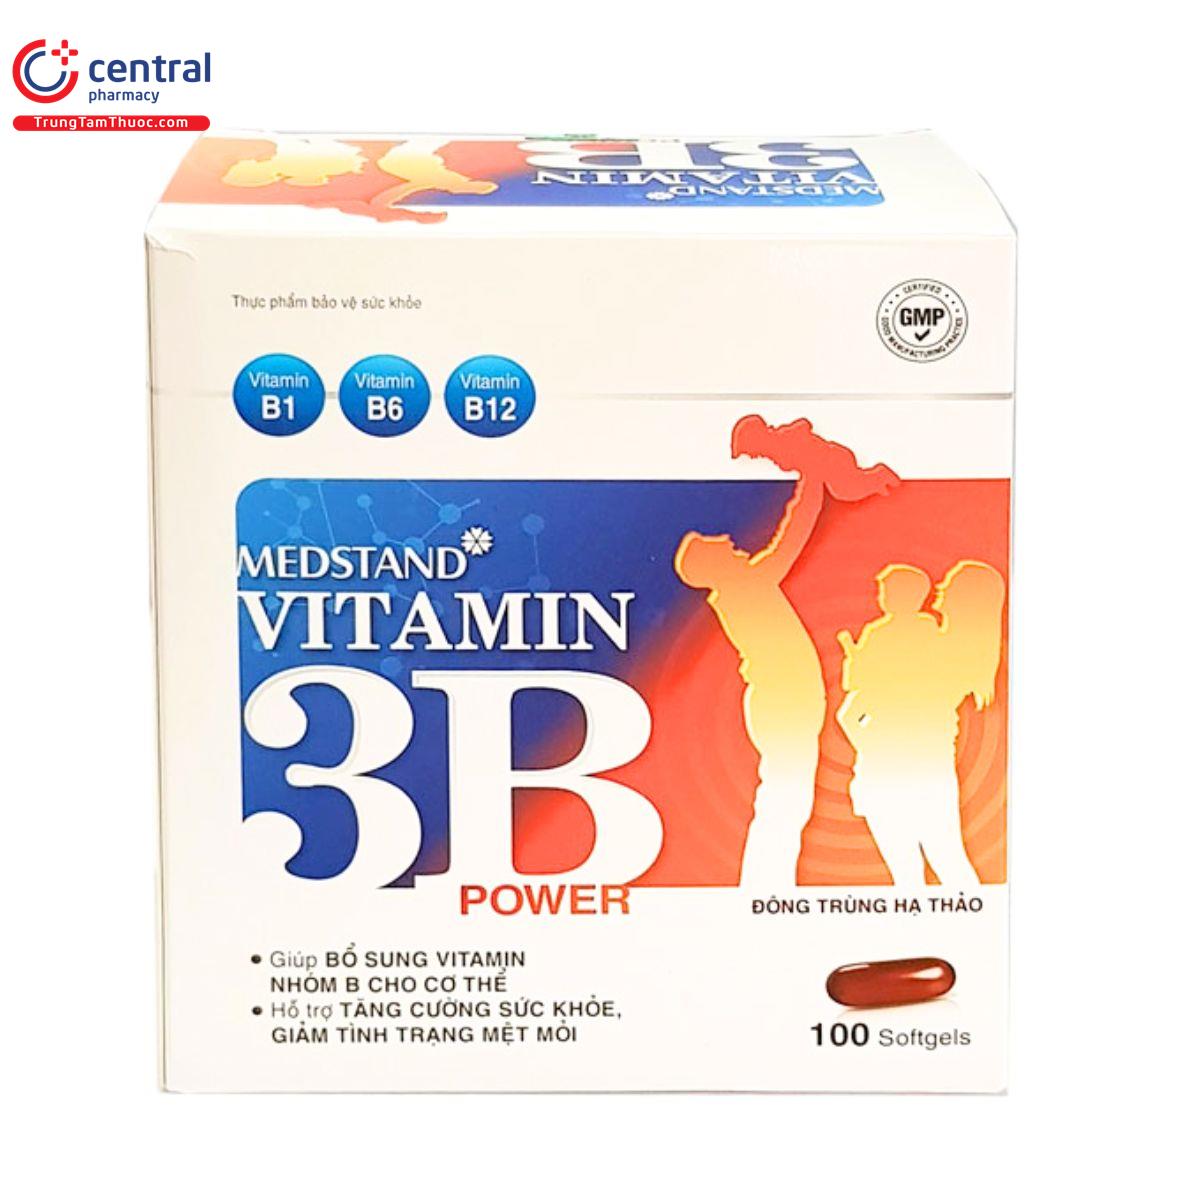 medstand vitamin 3b power 1 A0645